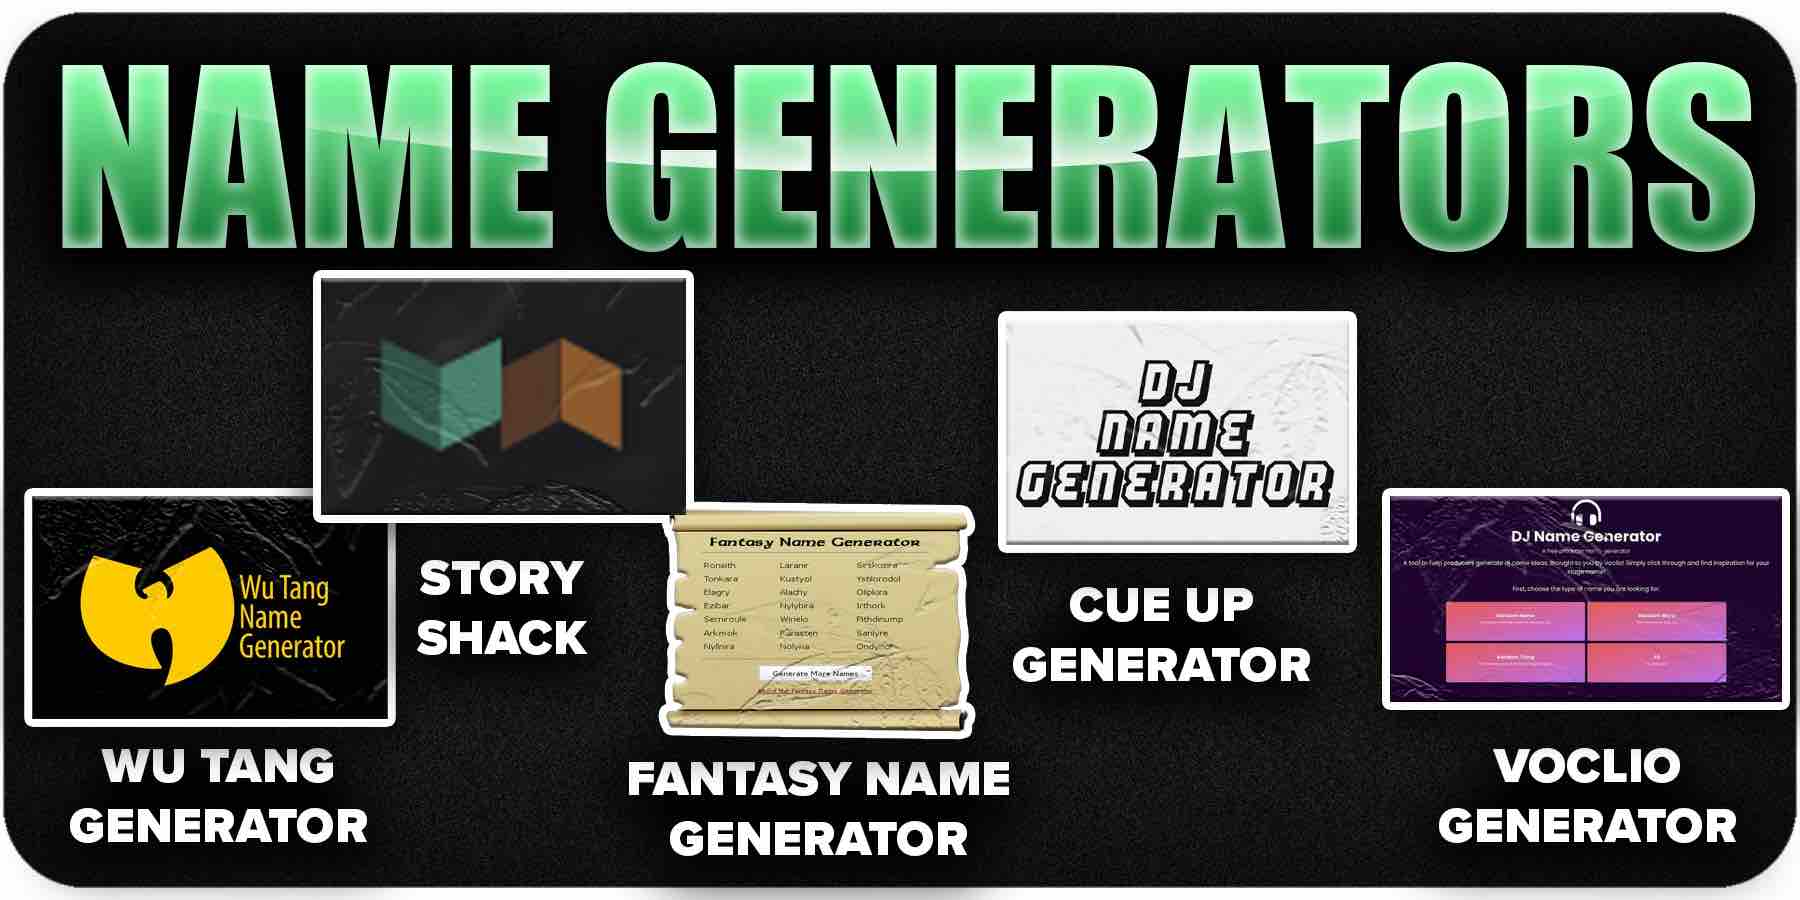 DJ name generator tools